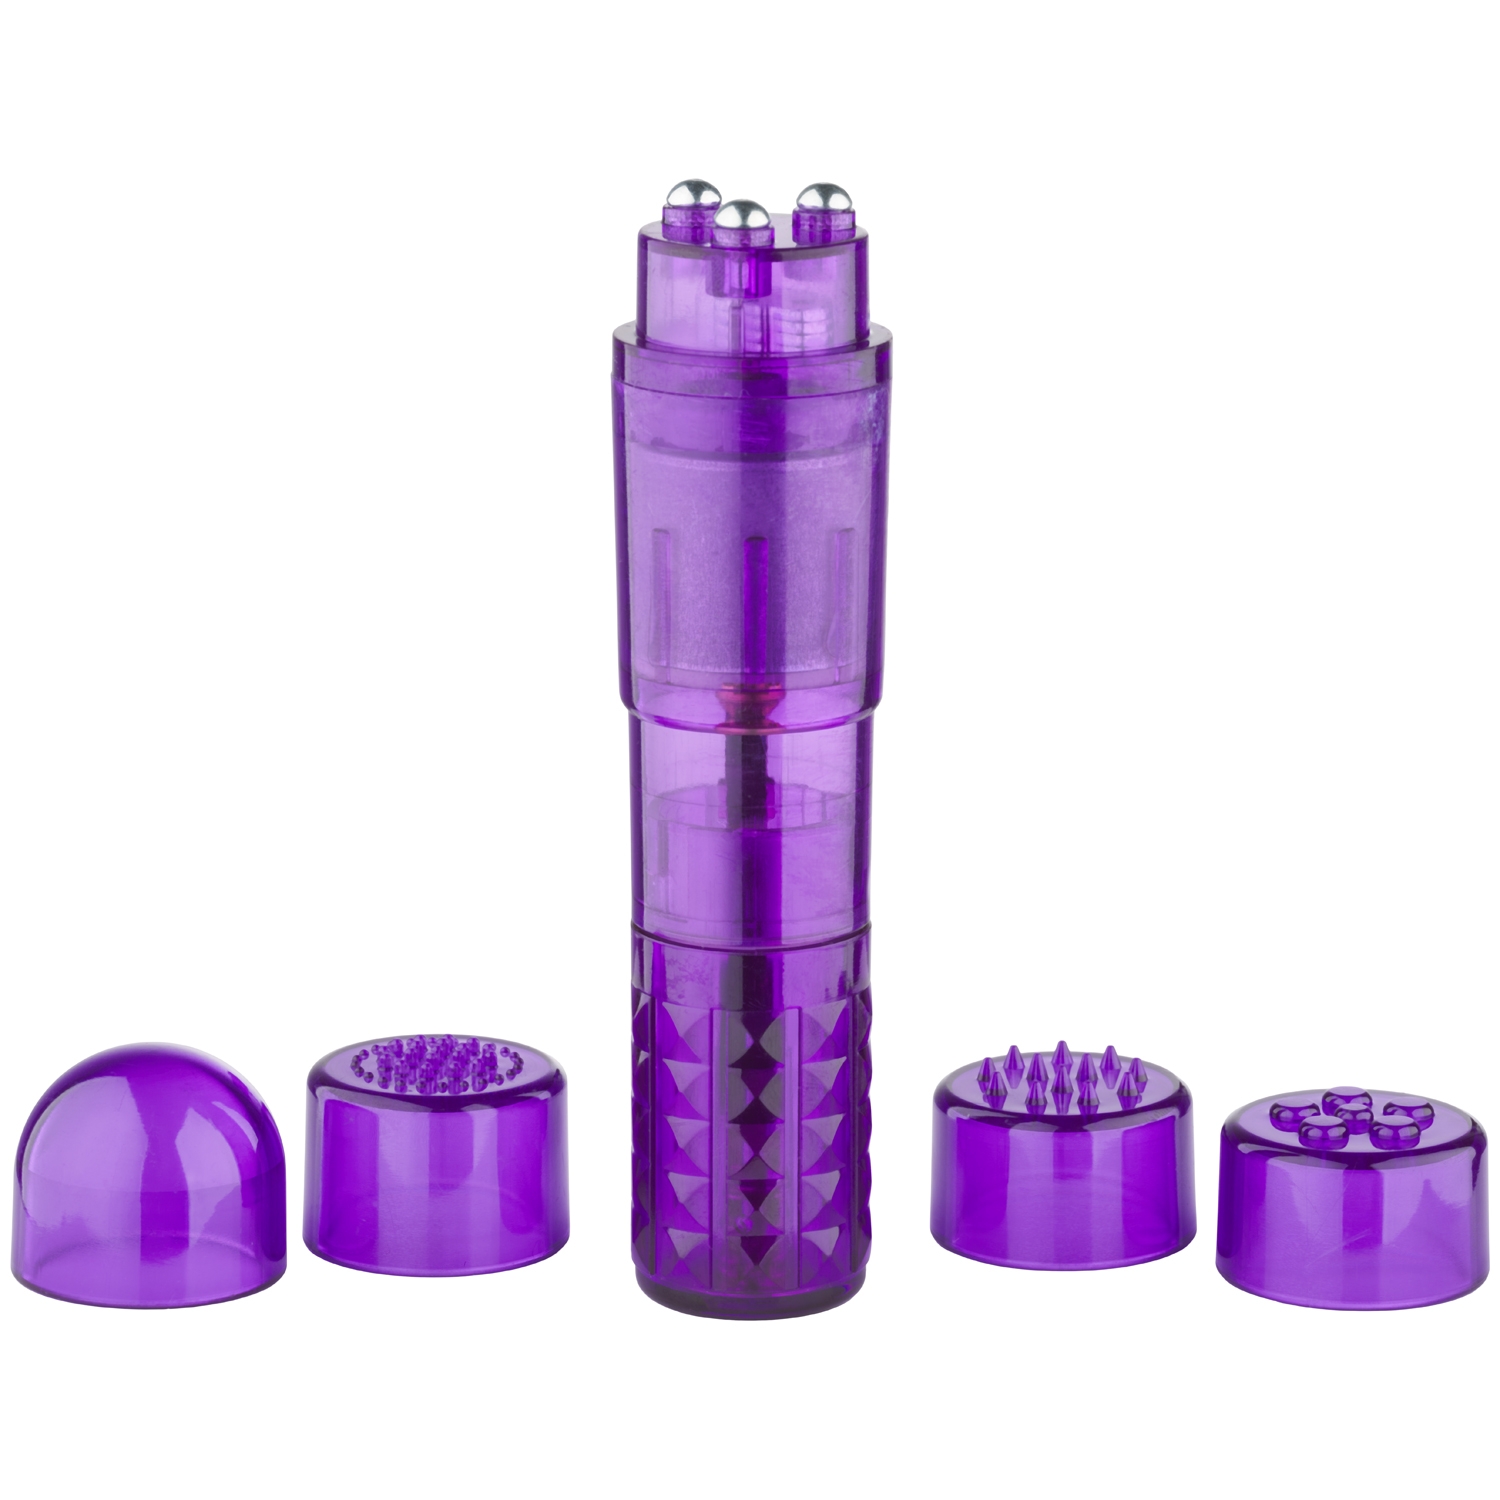 6: baseks Power Pocket Klitoris Vibrator      - Purple